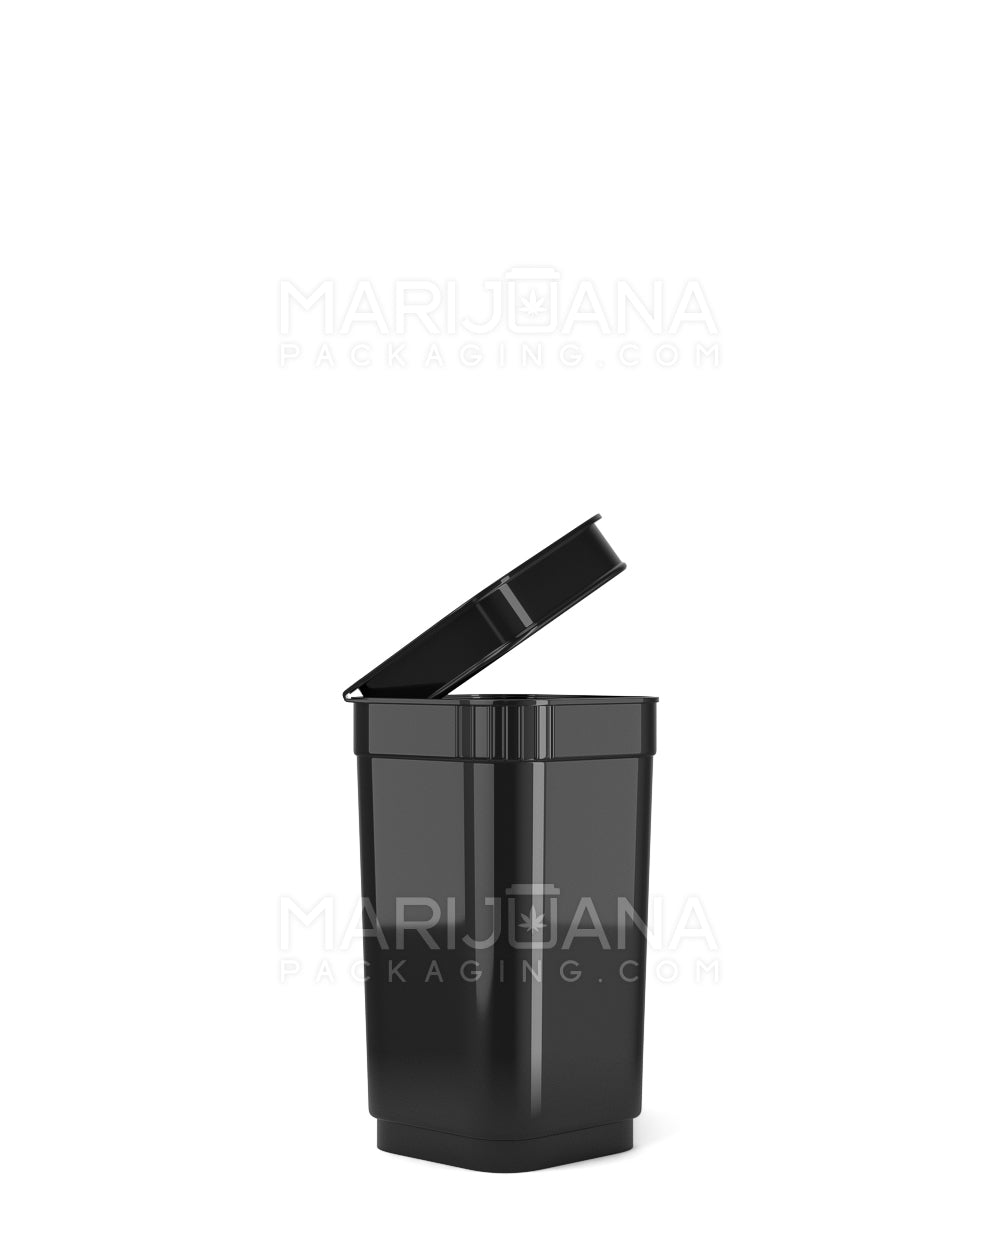 POLLEN GEAR | Child Resistant 100% Recyclable Opaque Black Pop Box Pop Top Bottles | 20dr - 3.5g - 590 Count